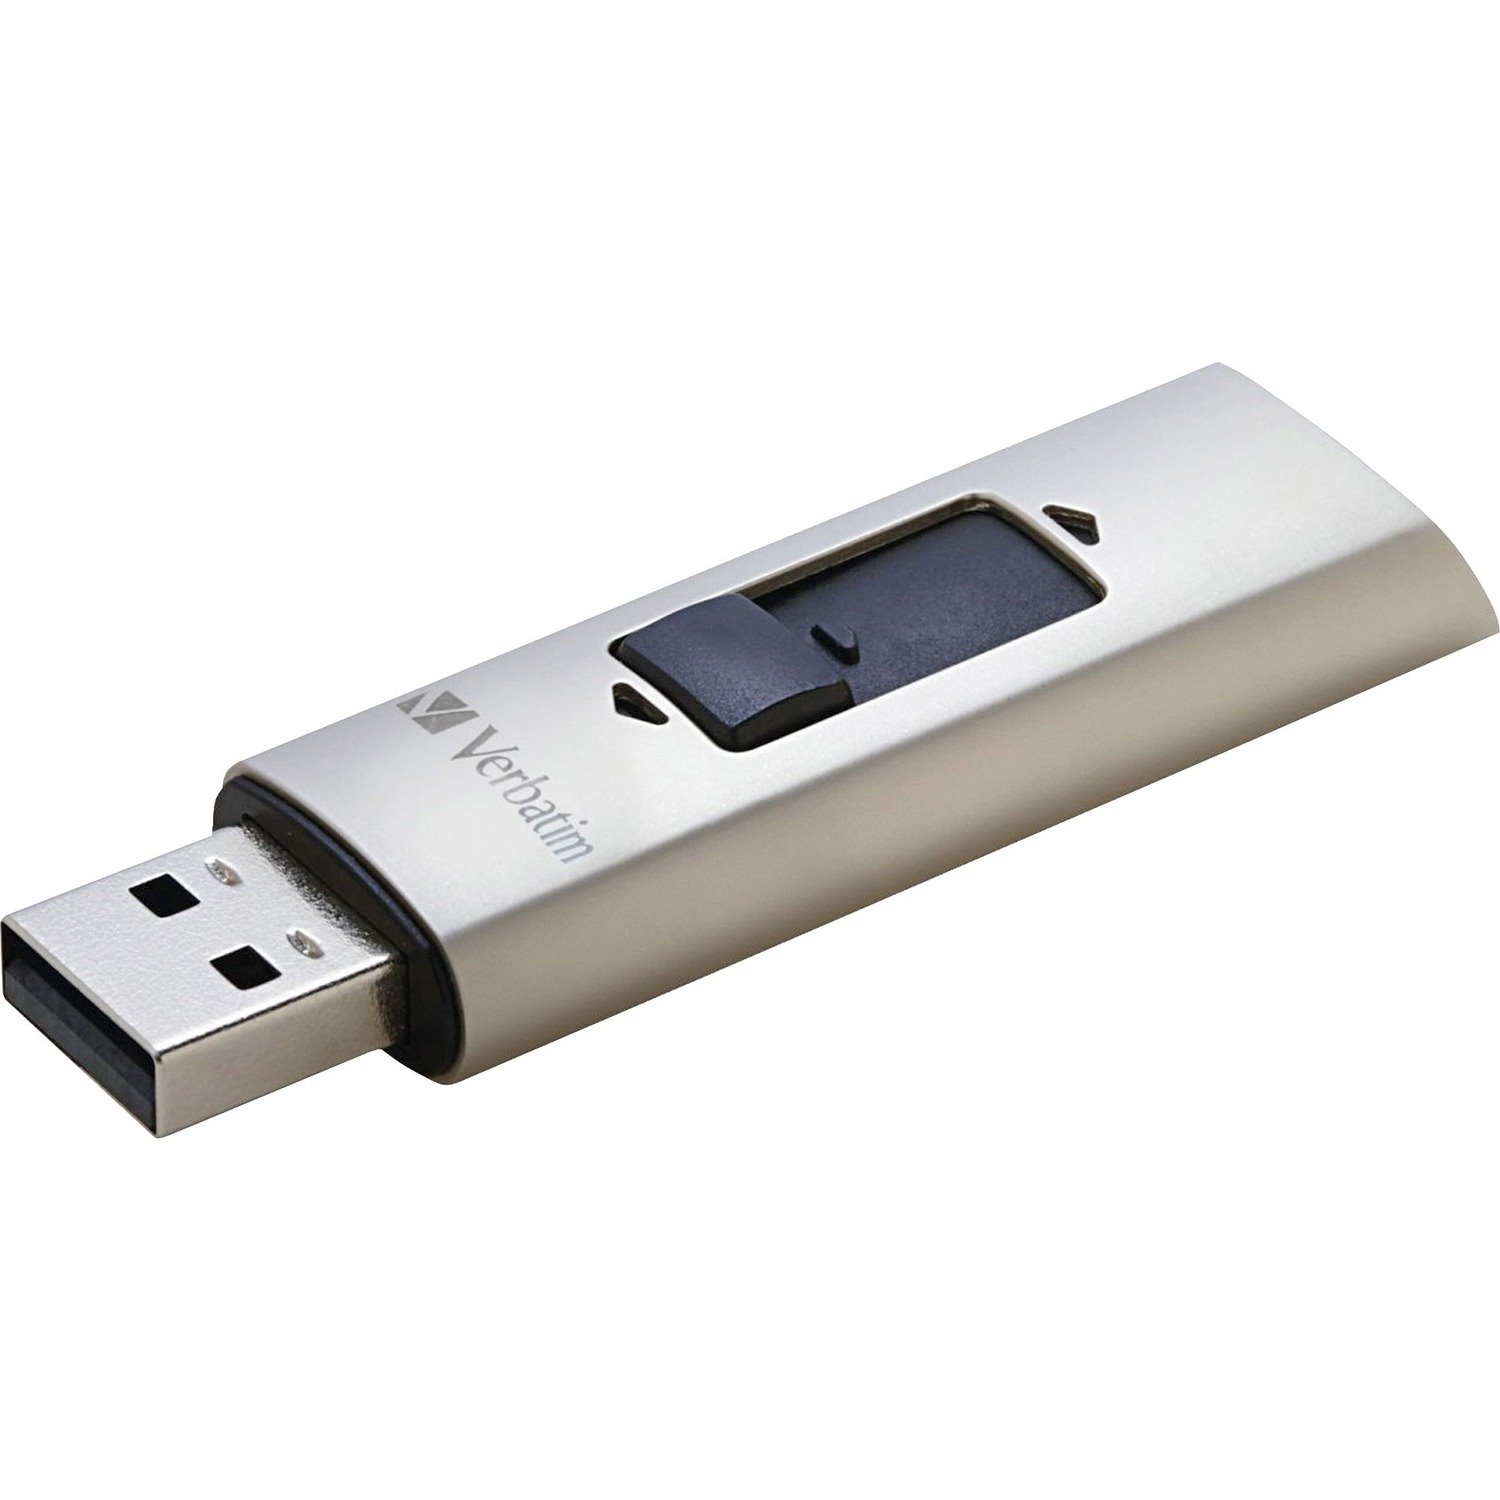 Verbatim Store 'n' Go Vx400 128 GB USB 3.0 Flash Drive - Silver